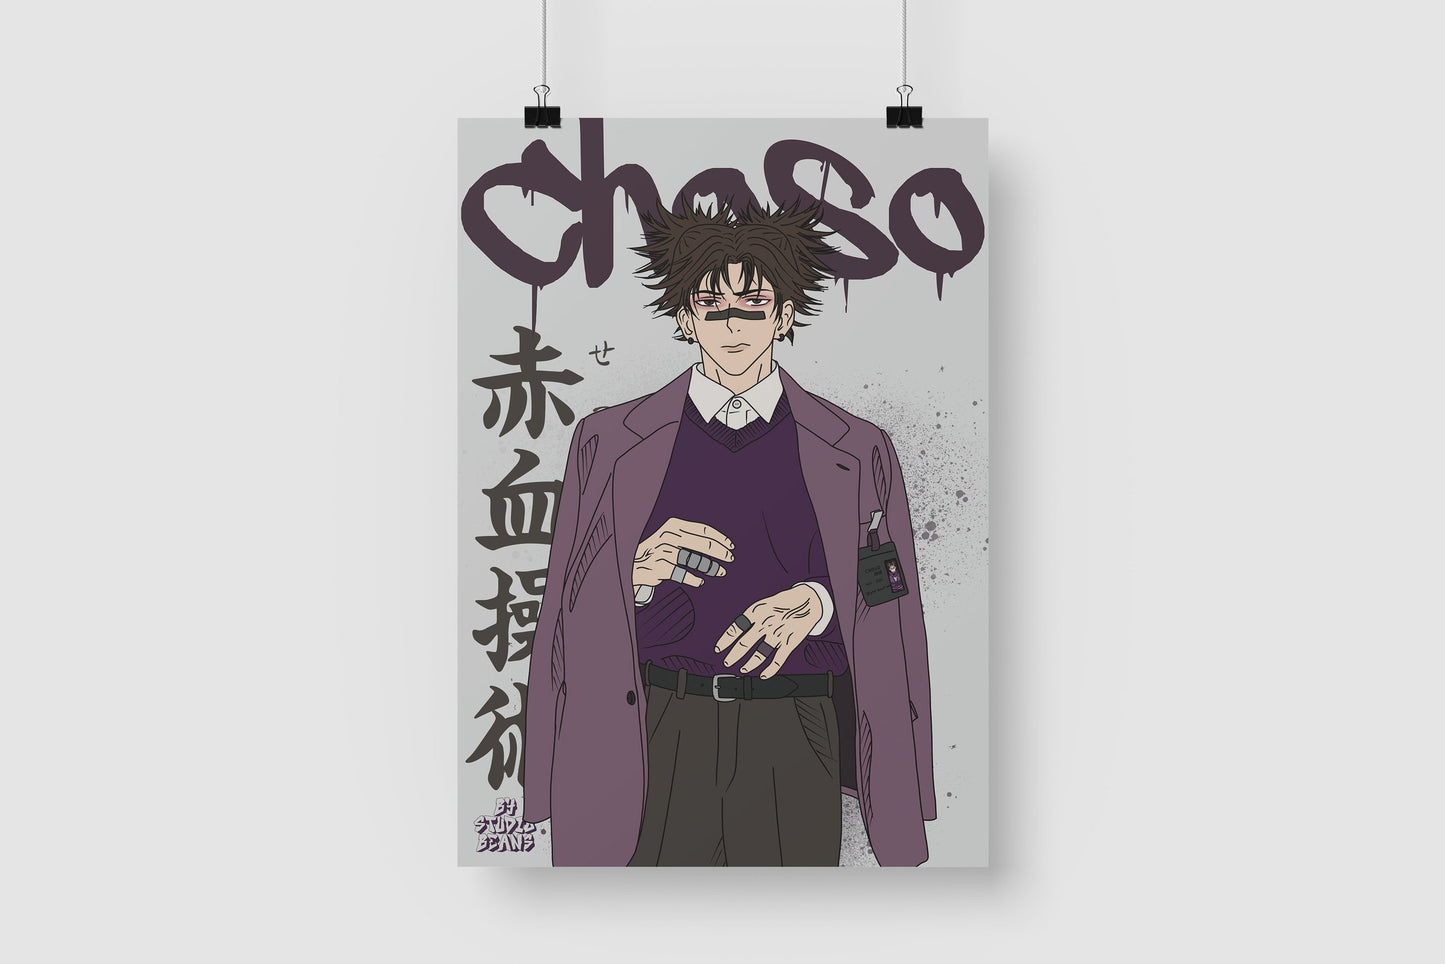 Choso - Print